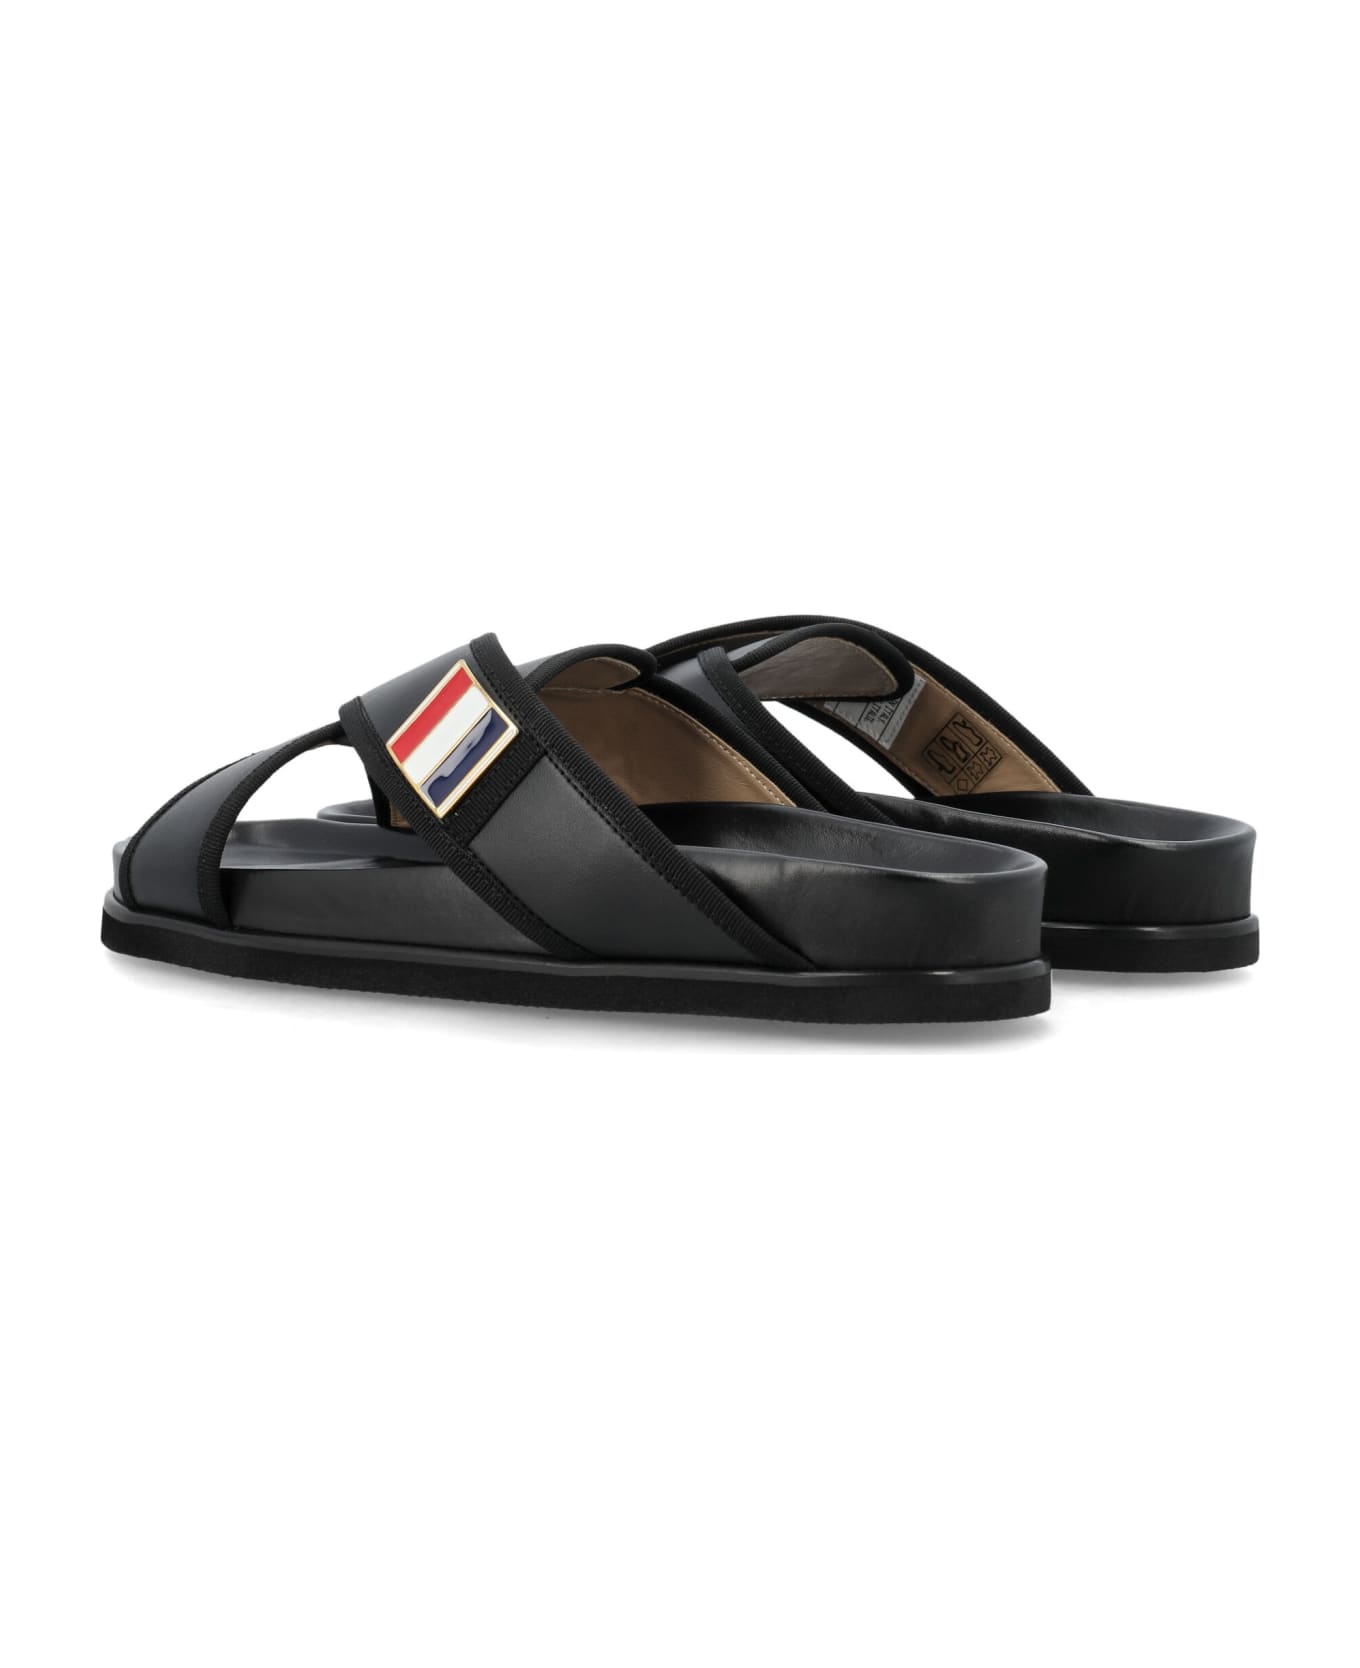 Thom Browne Criss Cross Loafer Sandal - Black